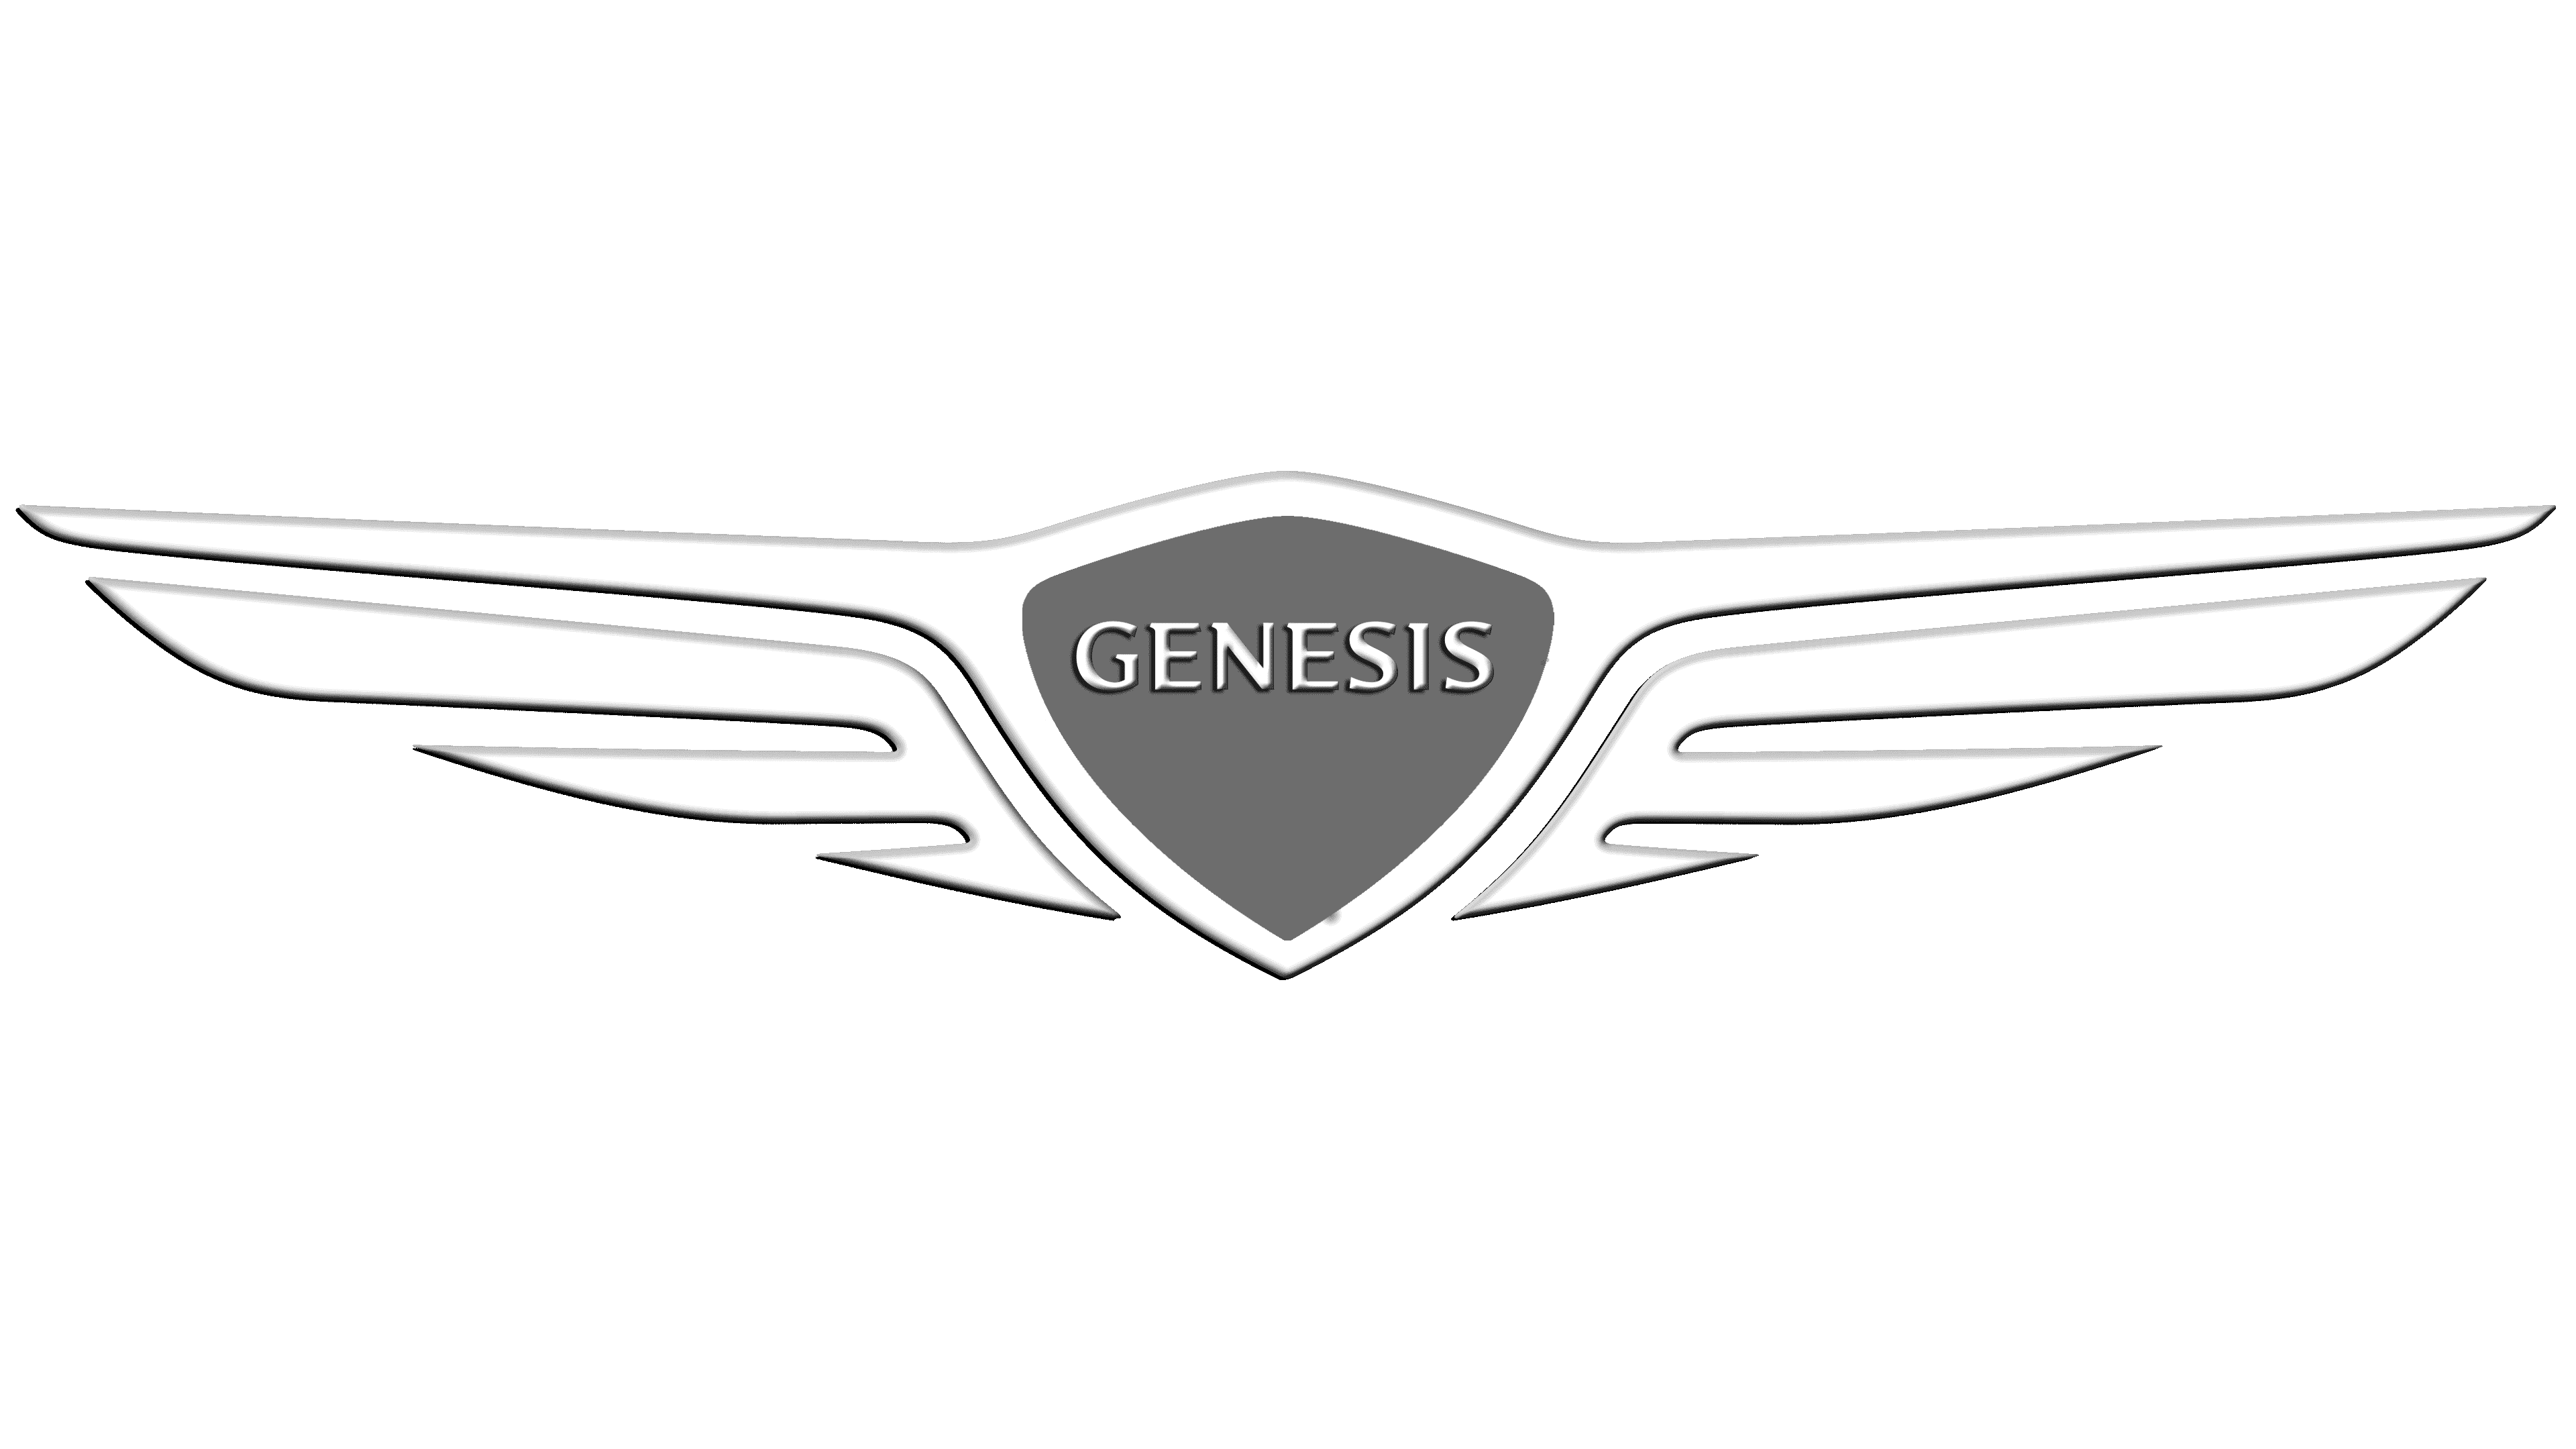 hyundai genesis logo